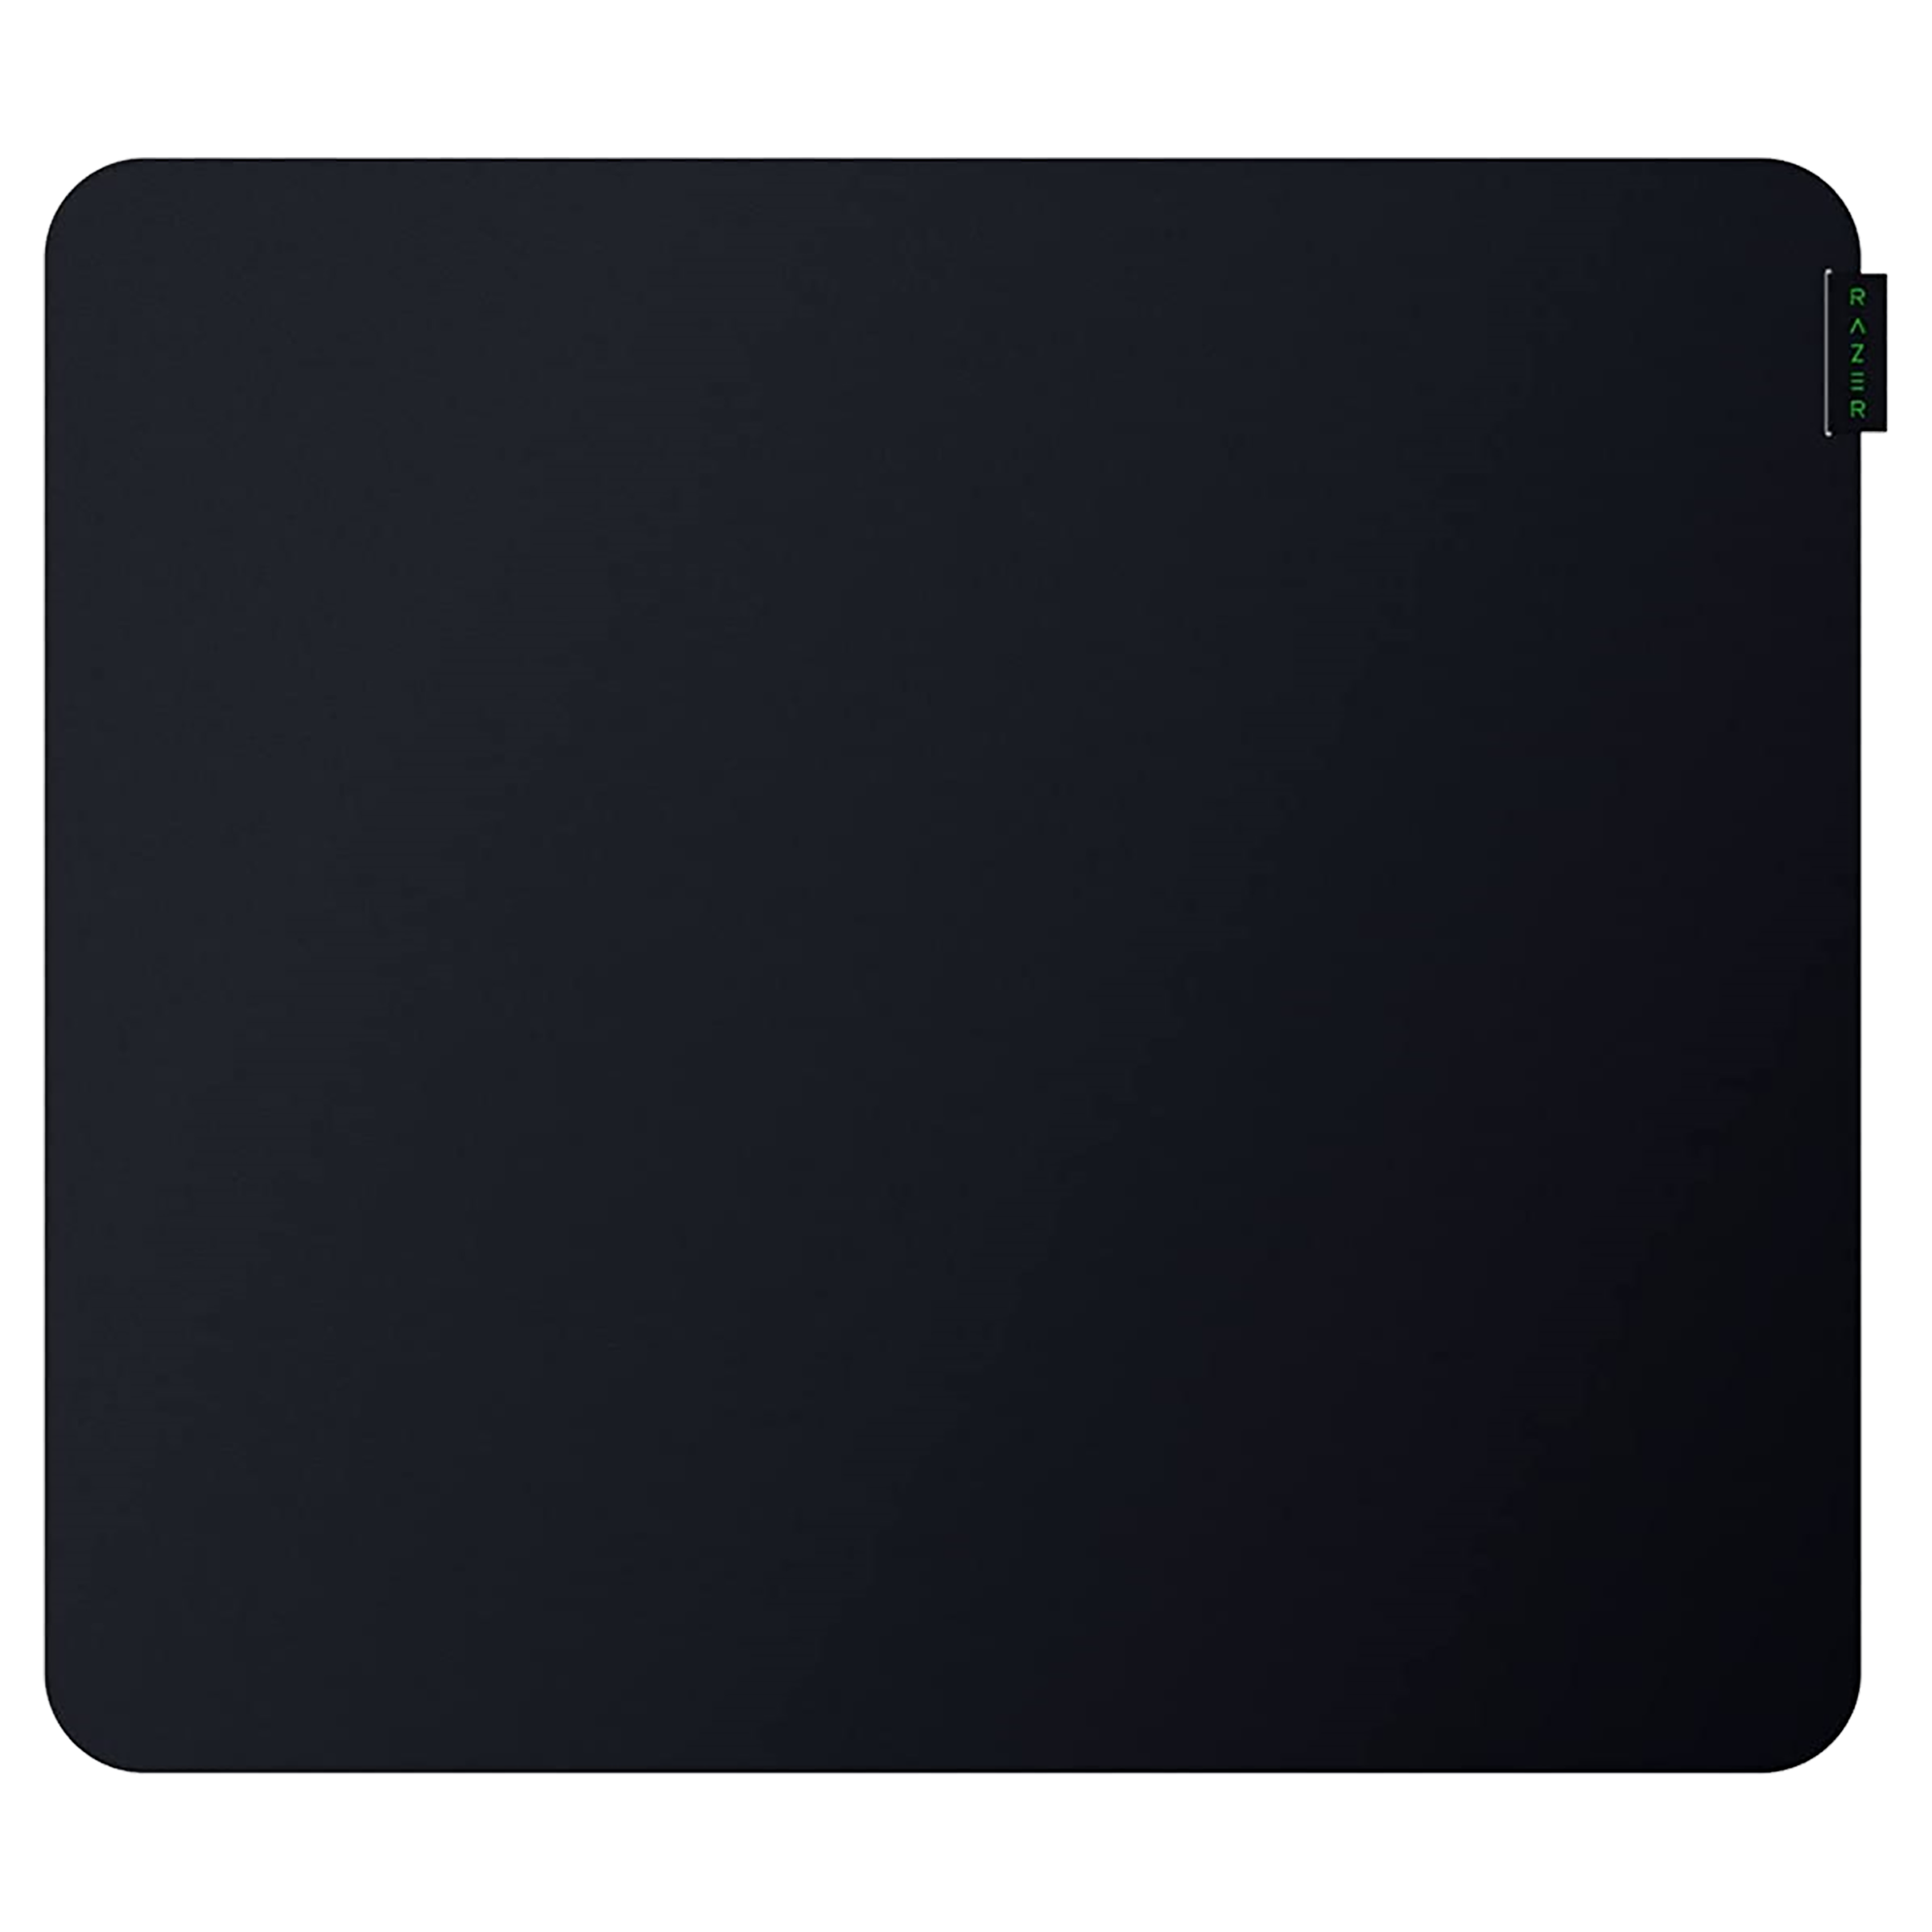 Razer Sphex V3 Mouse Pad For Mouse (Adhesive Base, RZ02-03820200-R3M1, Black)_1